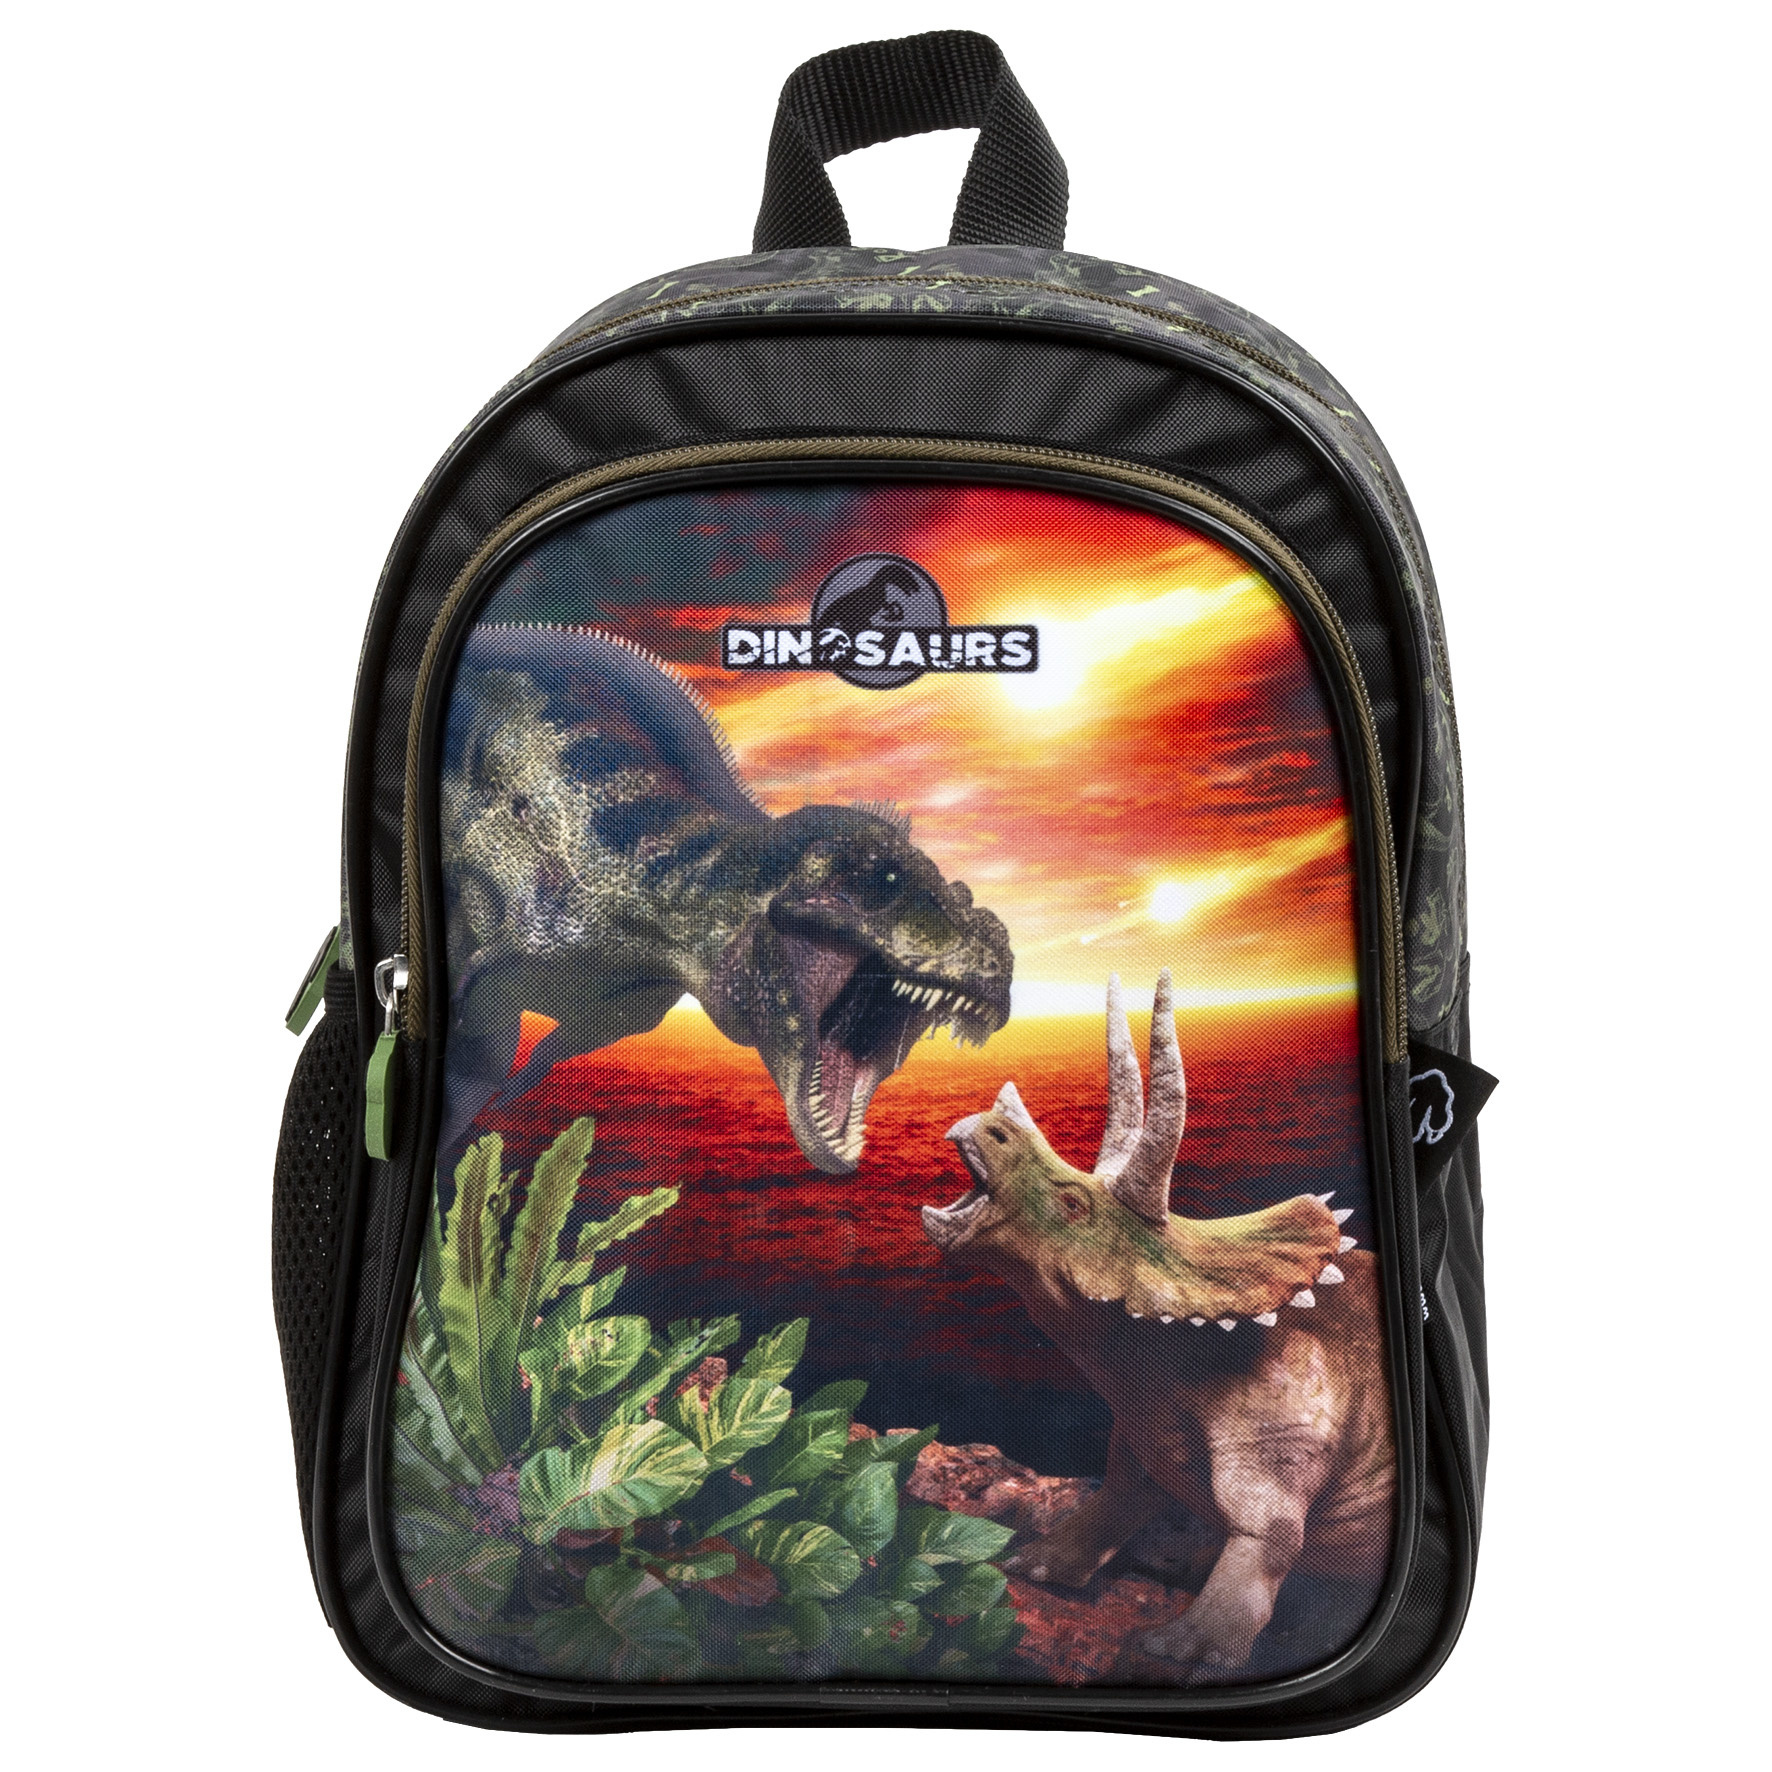 Dinosaurus Toddler backpack, Scream - 29 x 23 x 10 cm - Polyester